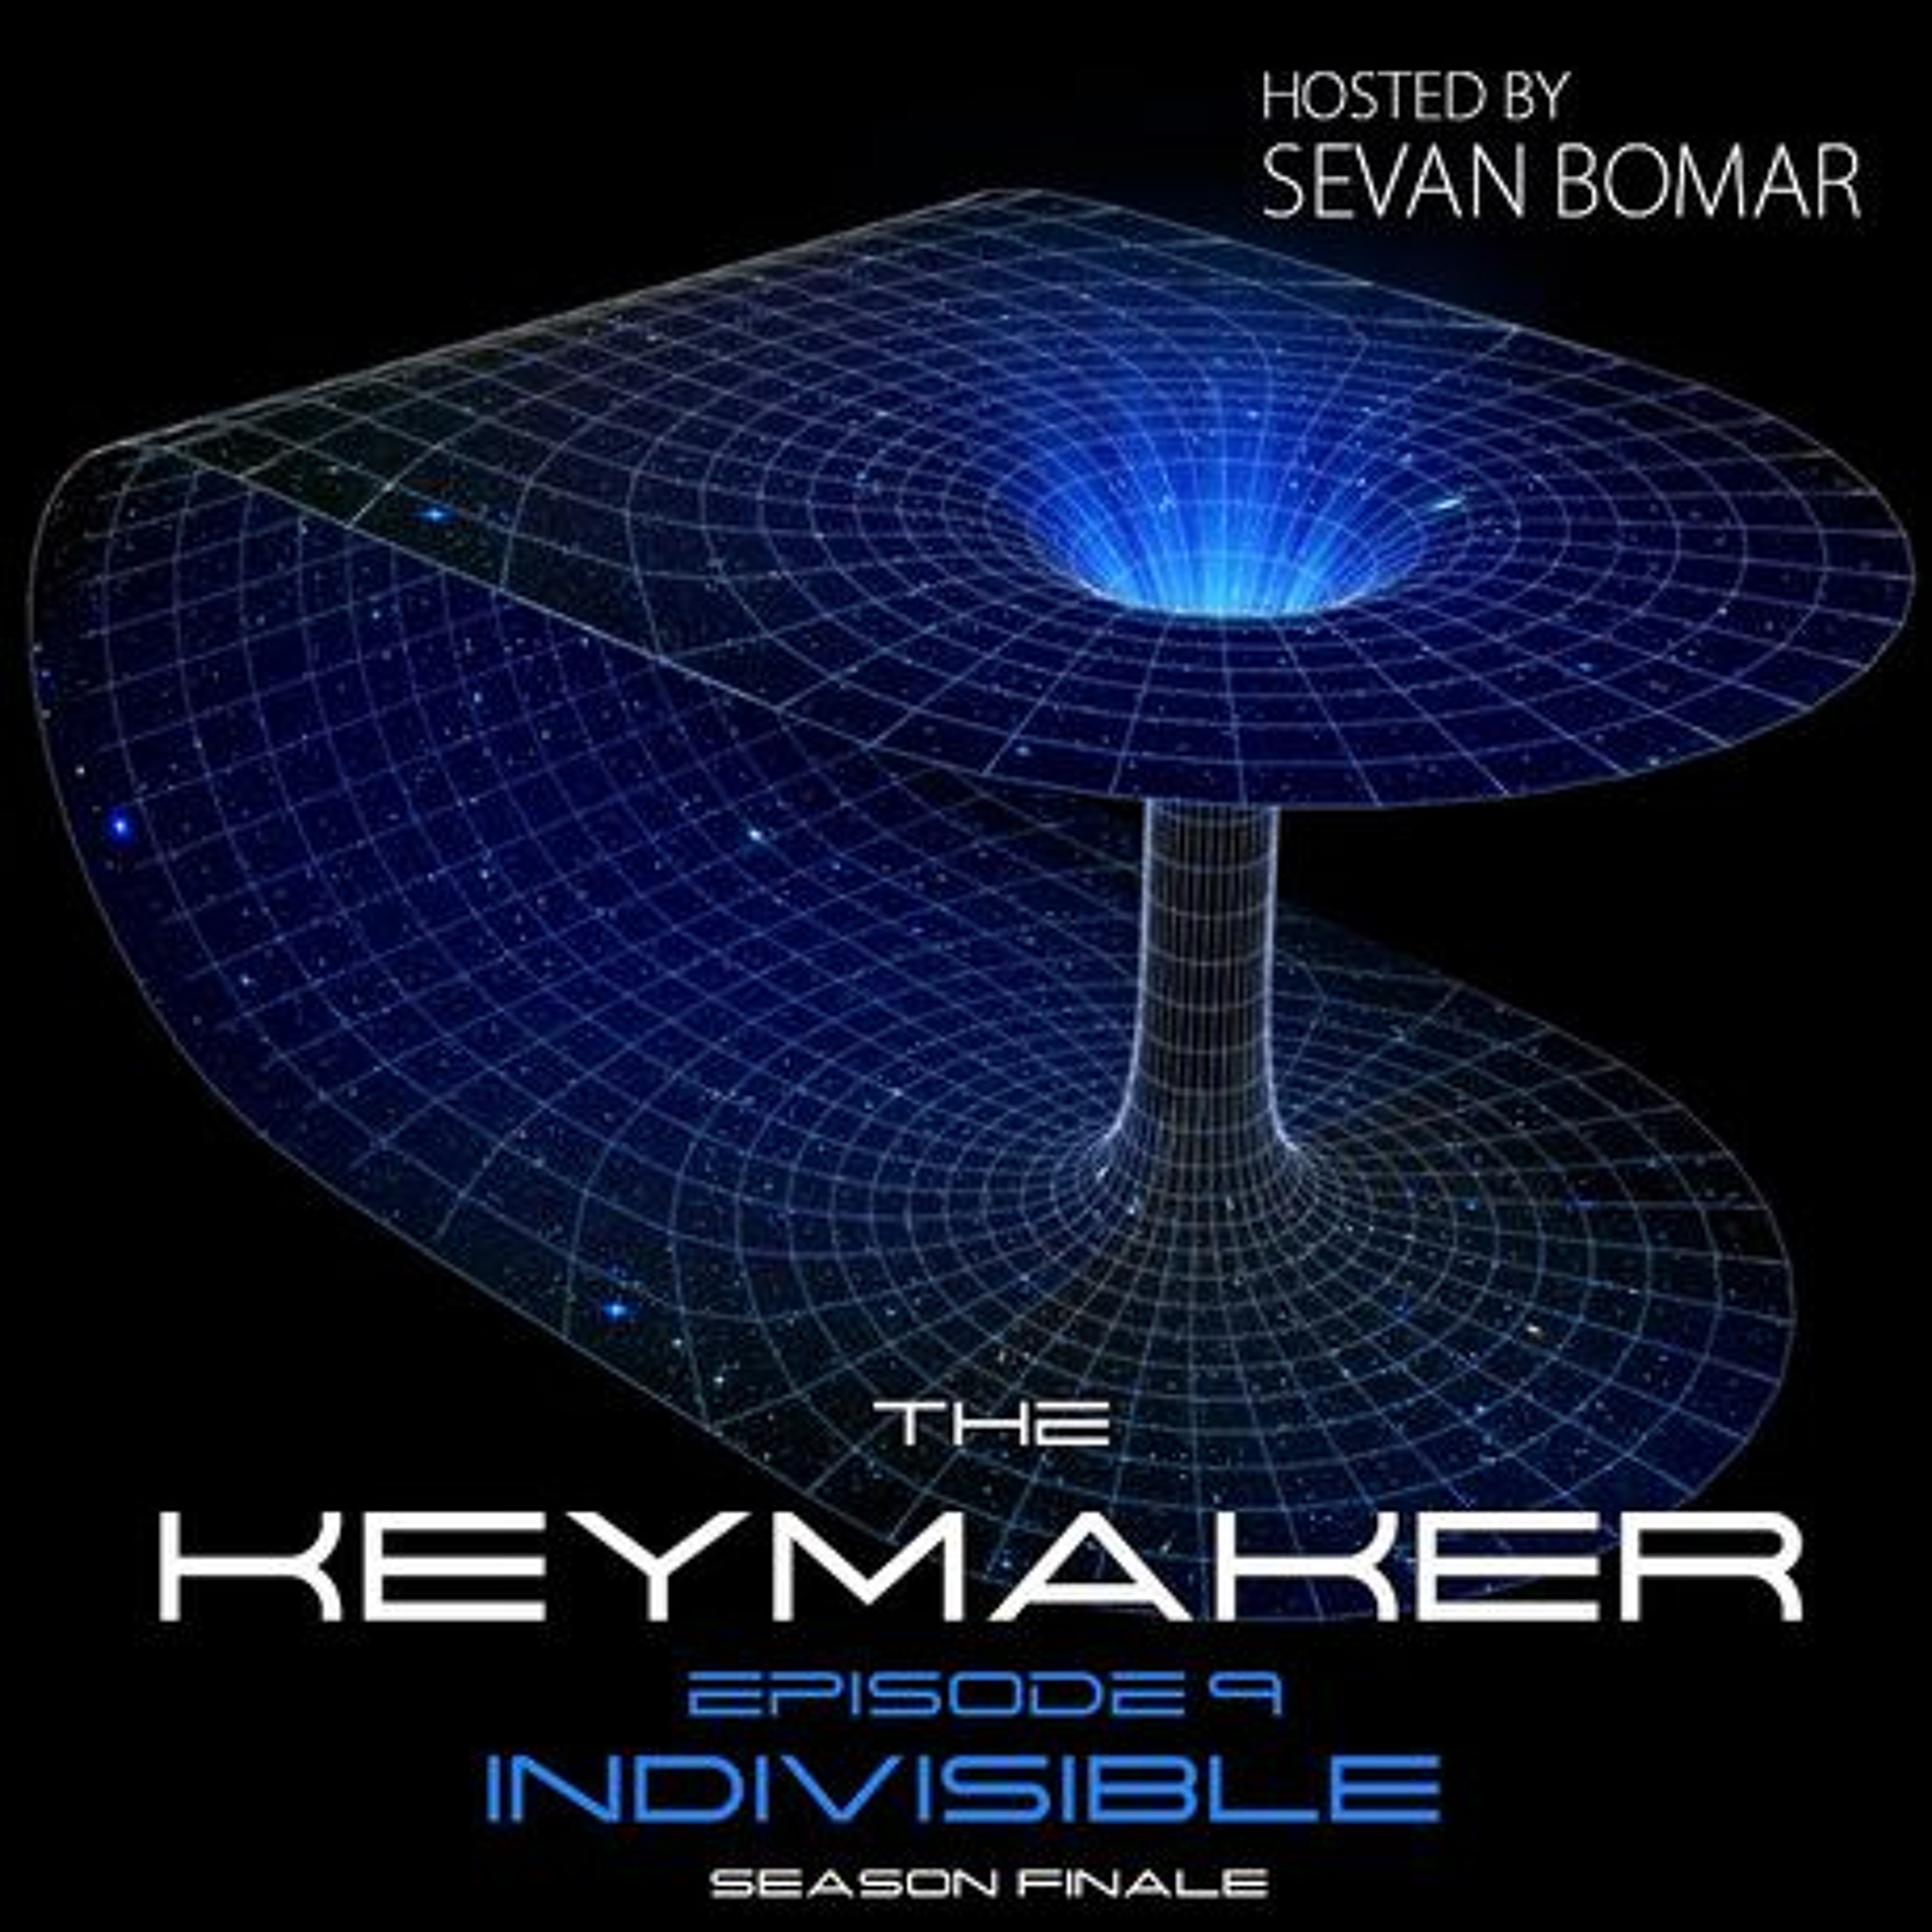 SEVAN BOMAR - THE KEYMAKER, EPISODE 9 - INDIVISIBLE, SEASON FINALE - JAN 2 2016